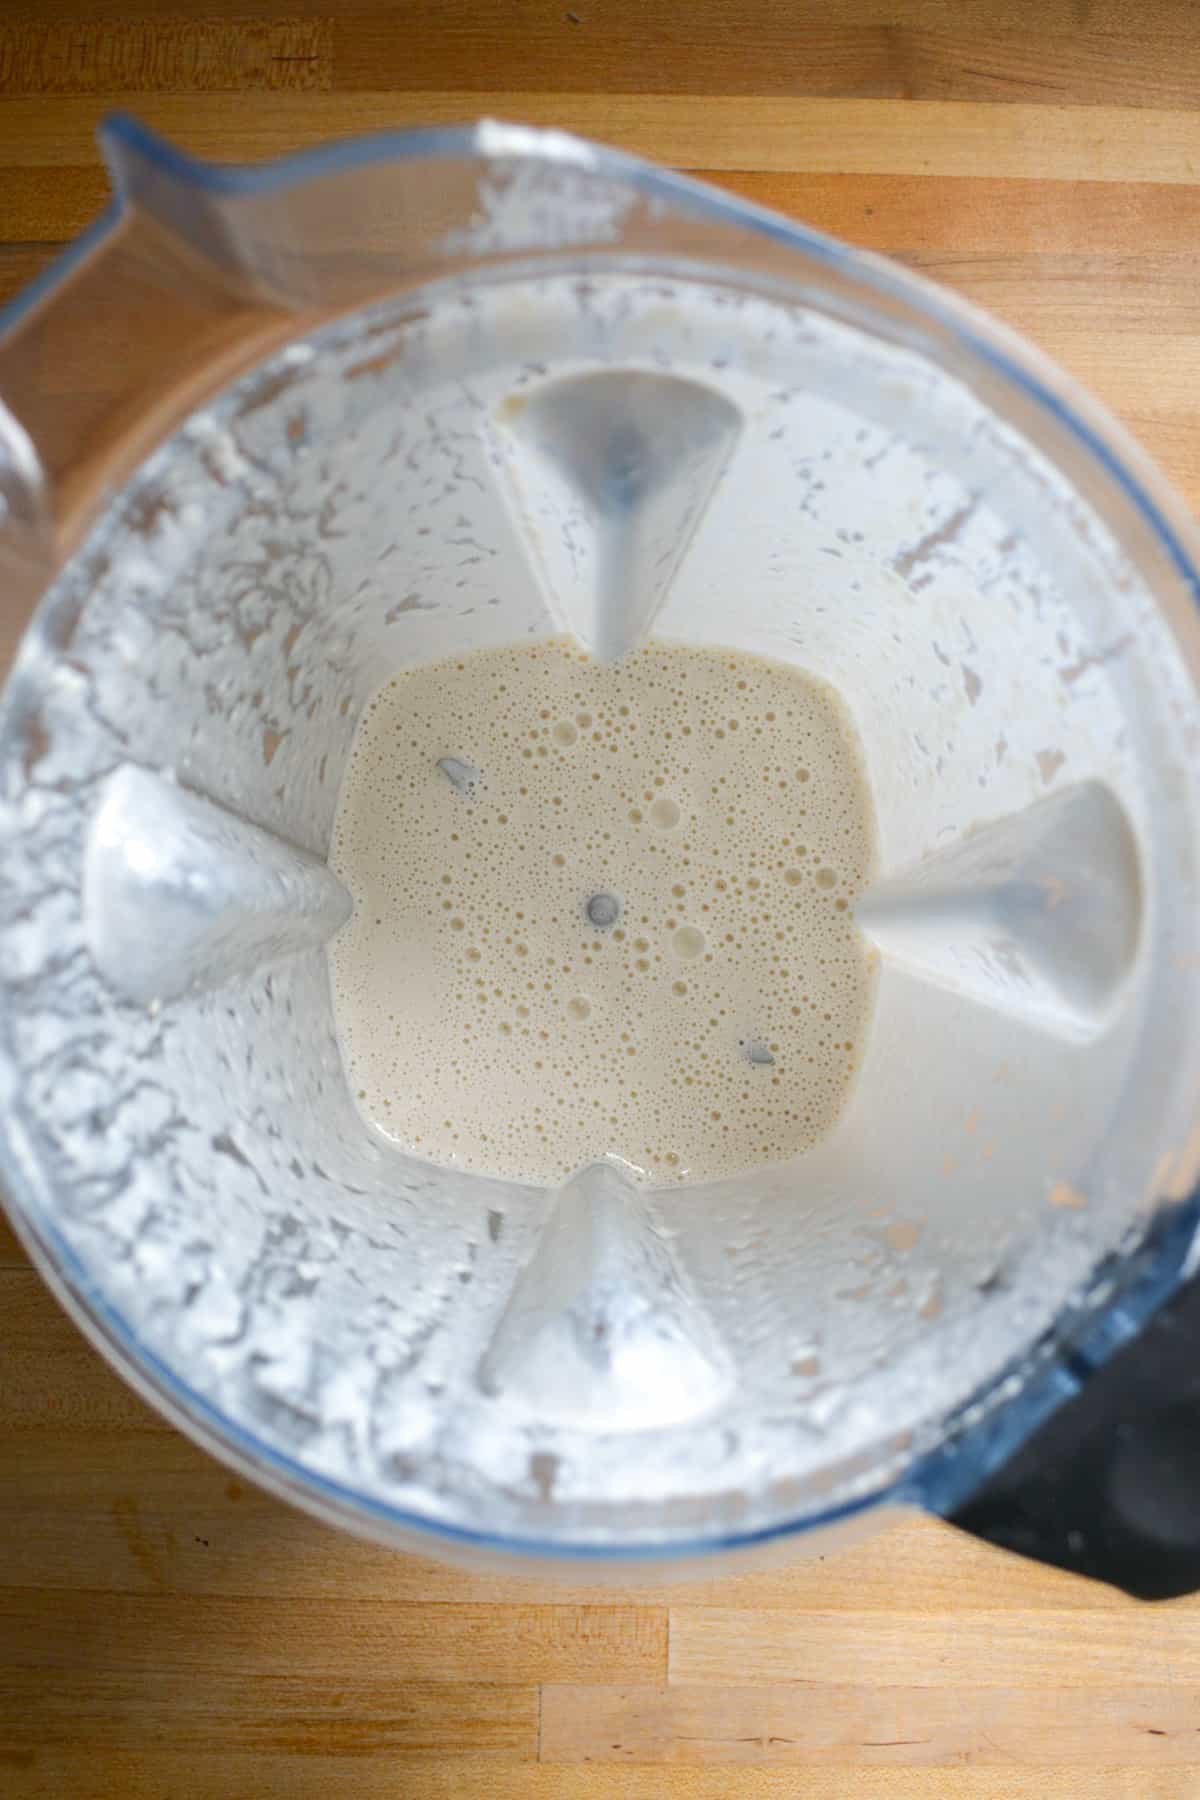 Vegan cashew cream in a blender.